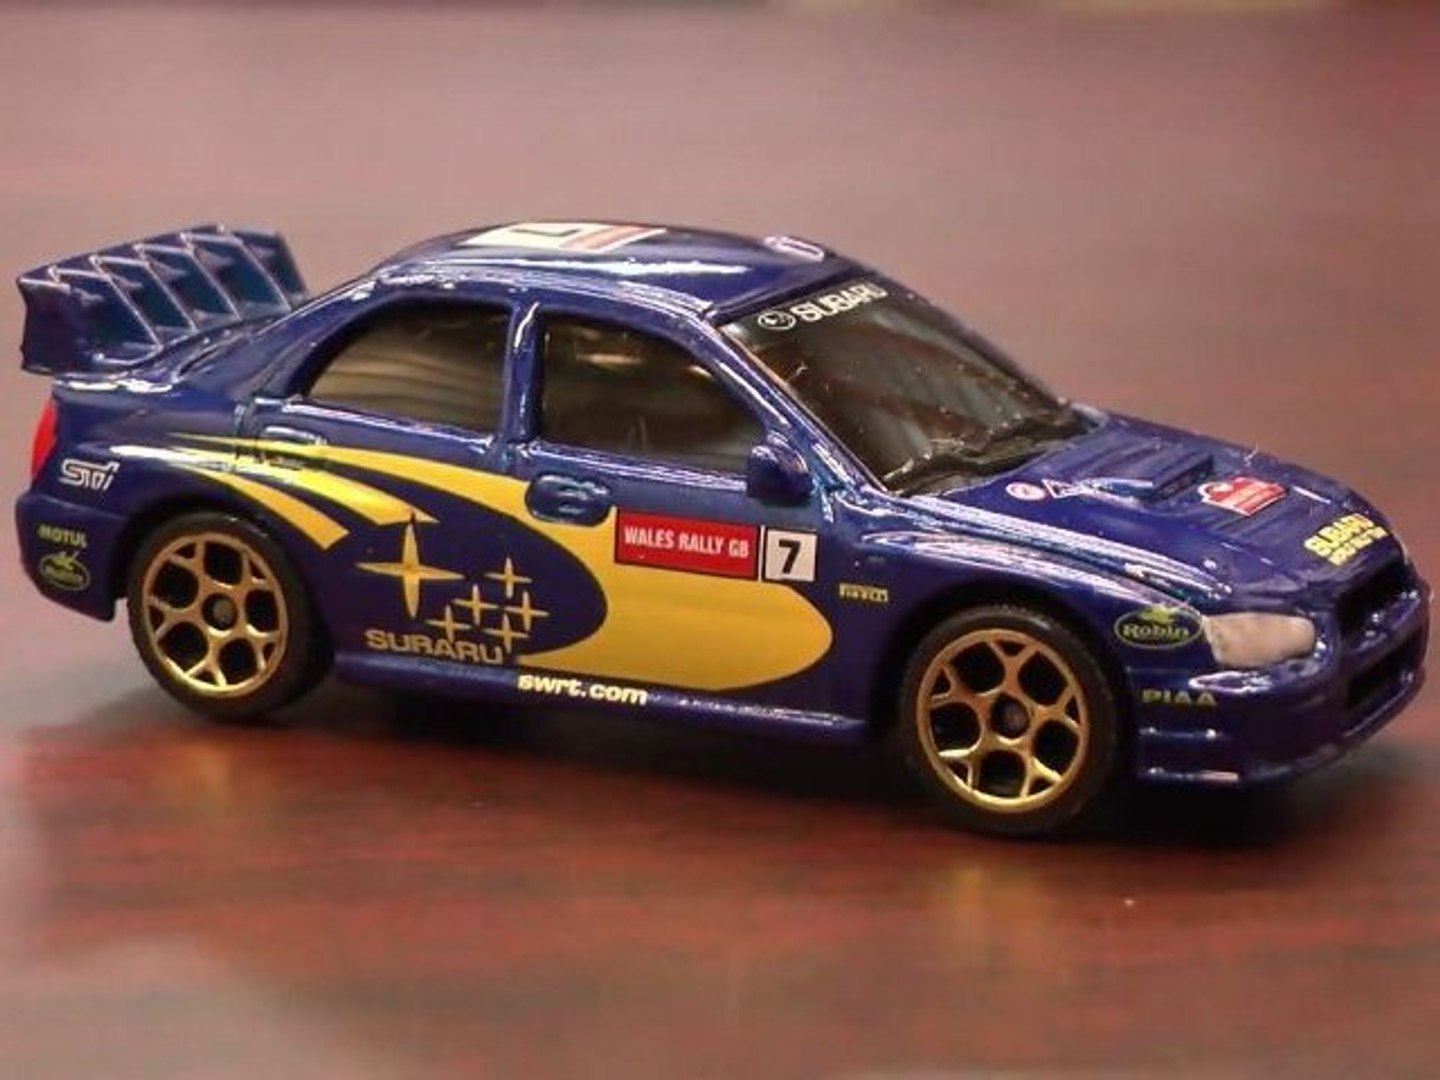 CGR Garage - SUBARU IMPREZA WRC Majorette car review - video Dailymotion